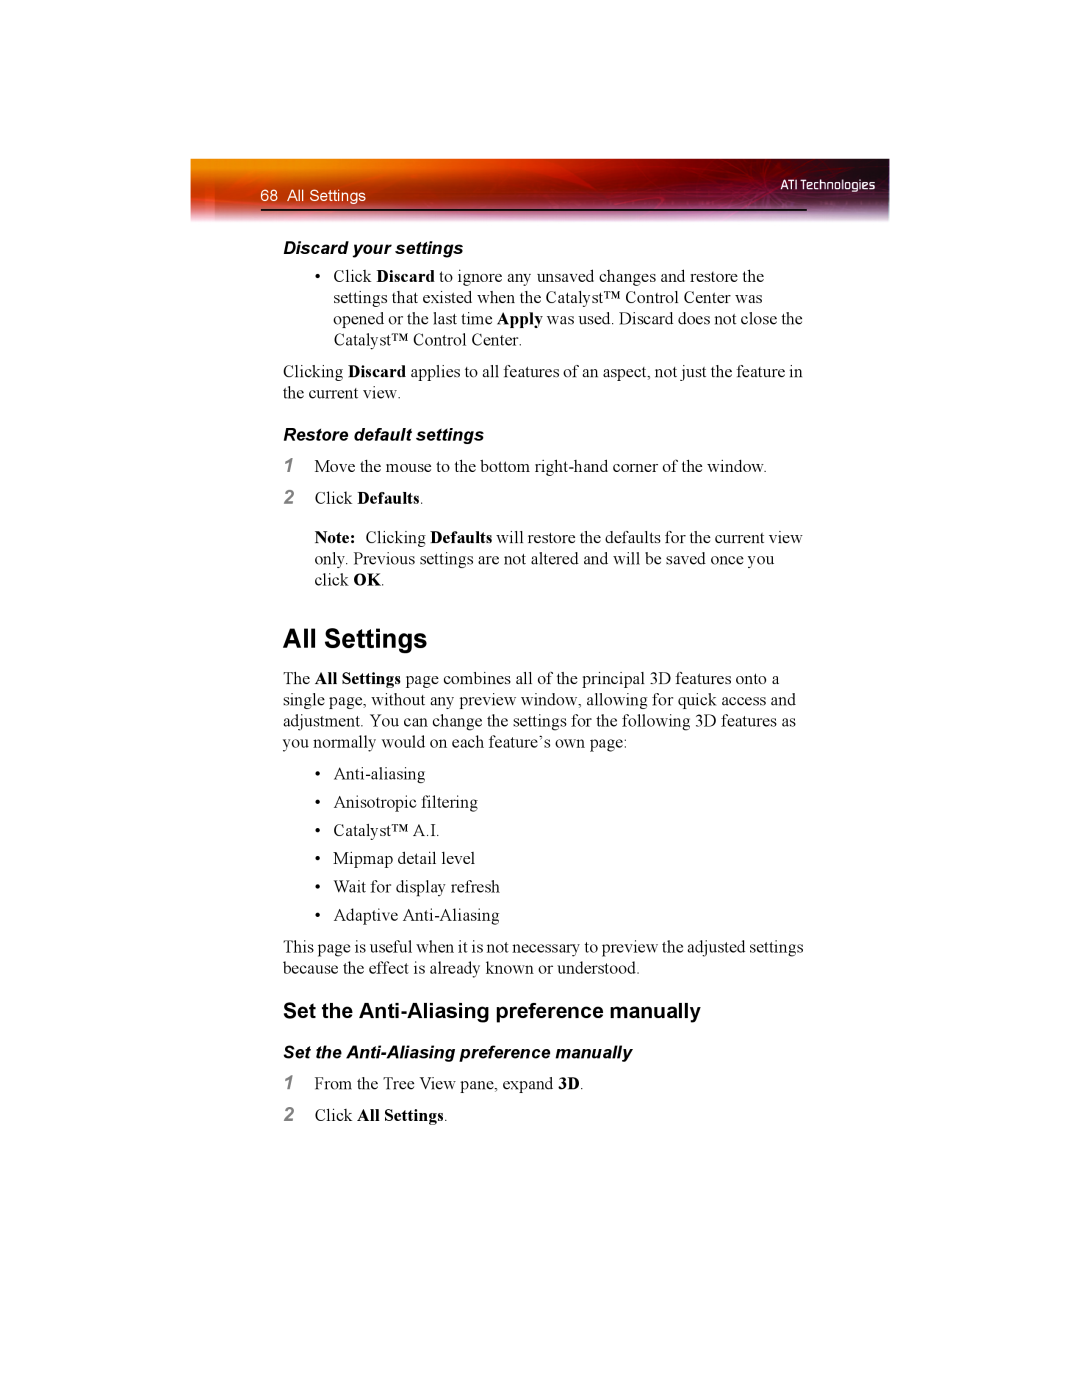 ATI Technologies X1550 SERIES manual All Settings, Discard your settings, Restore default settings, Click Defaults 